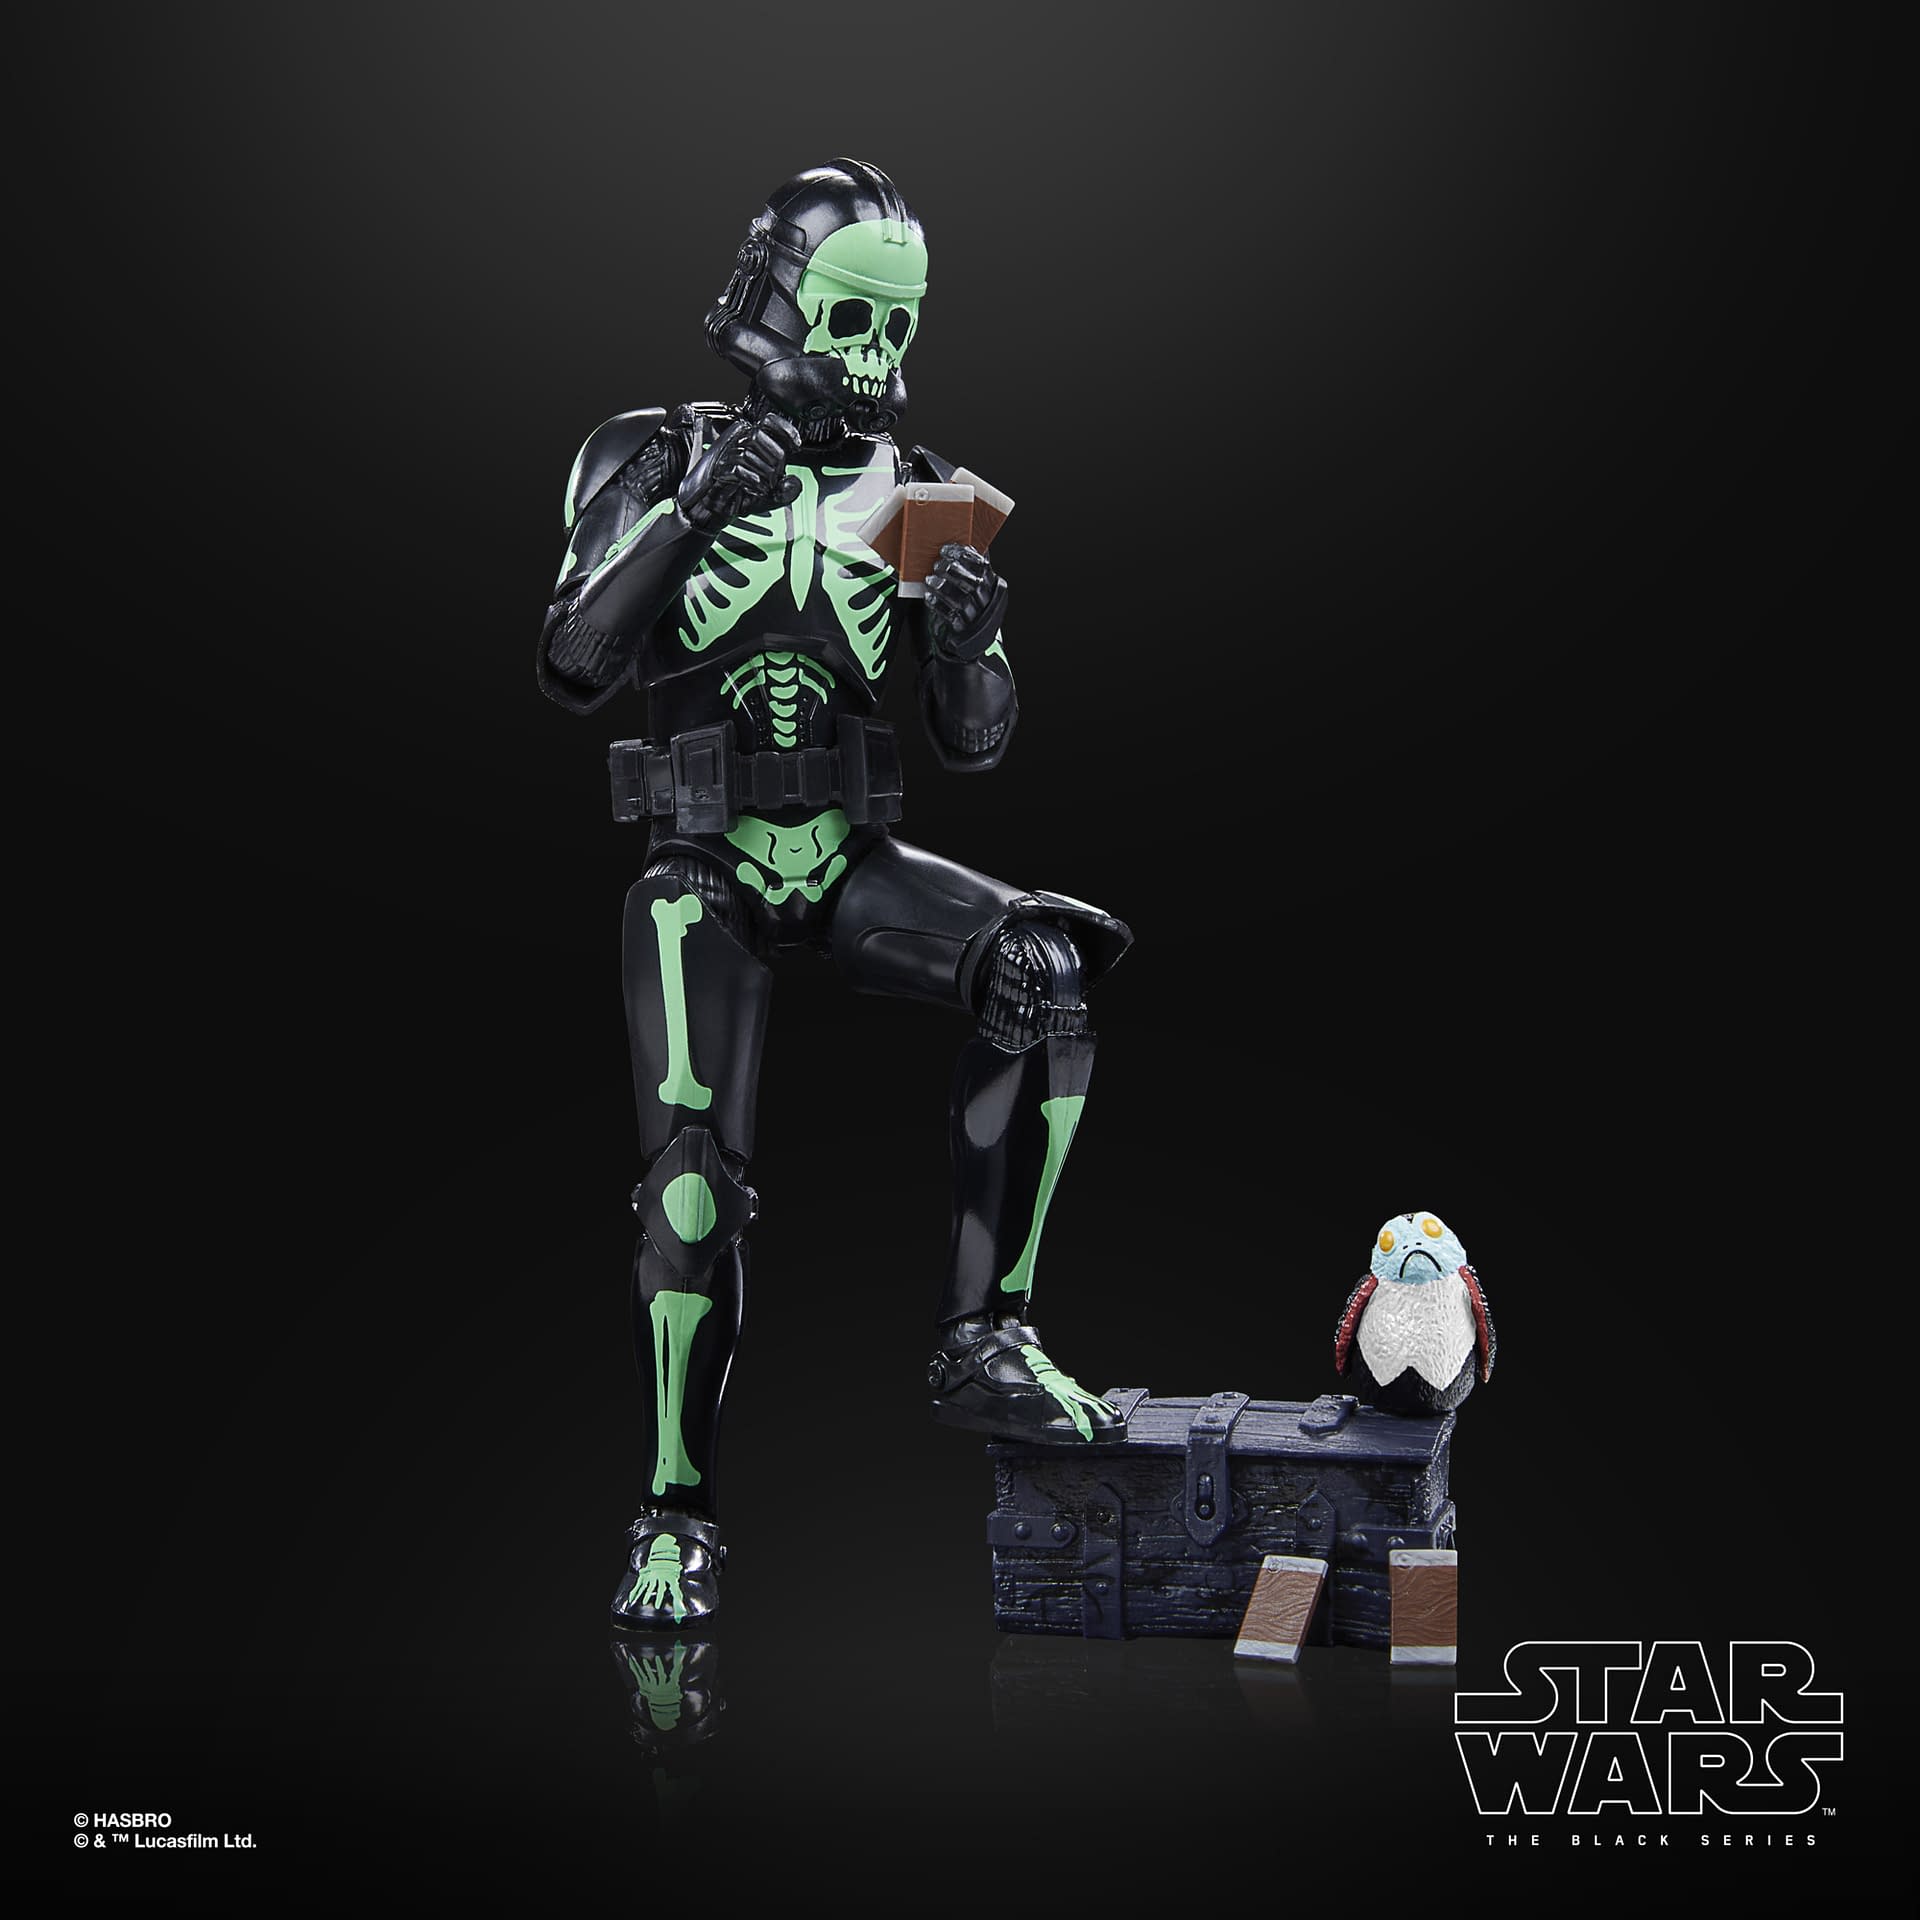 Hasbro Reveals Star Wars: The Black Series Halloween Edition Figures